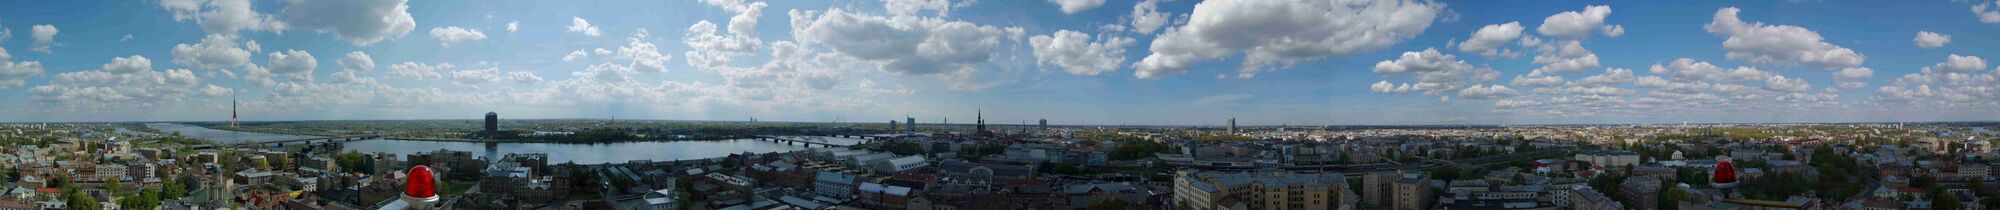 Панорама Риги со здания Латвийской академии наук